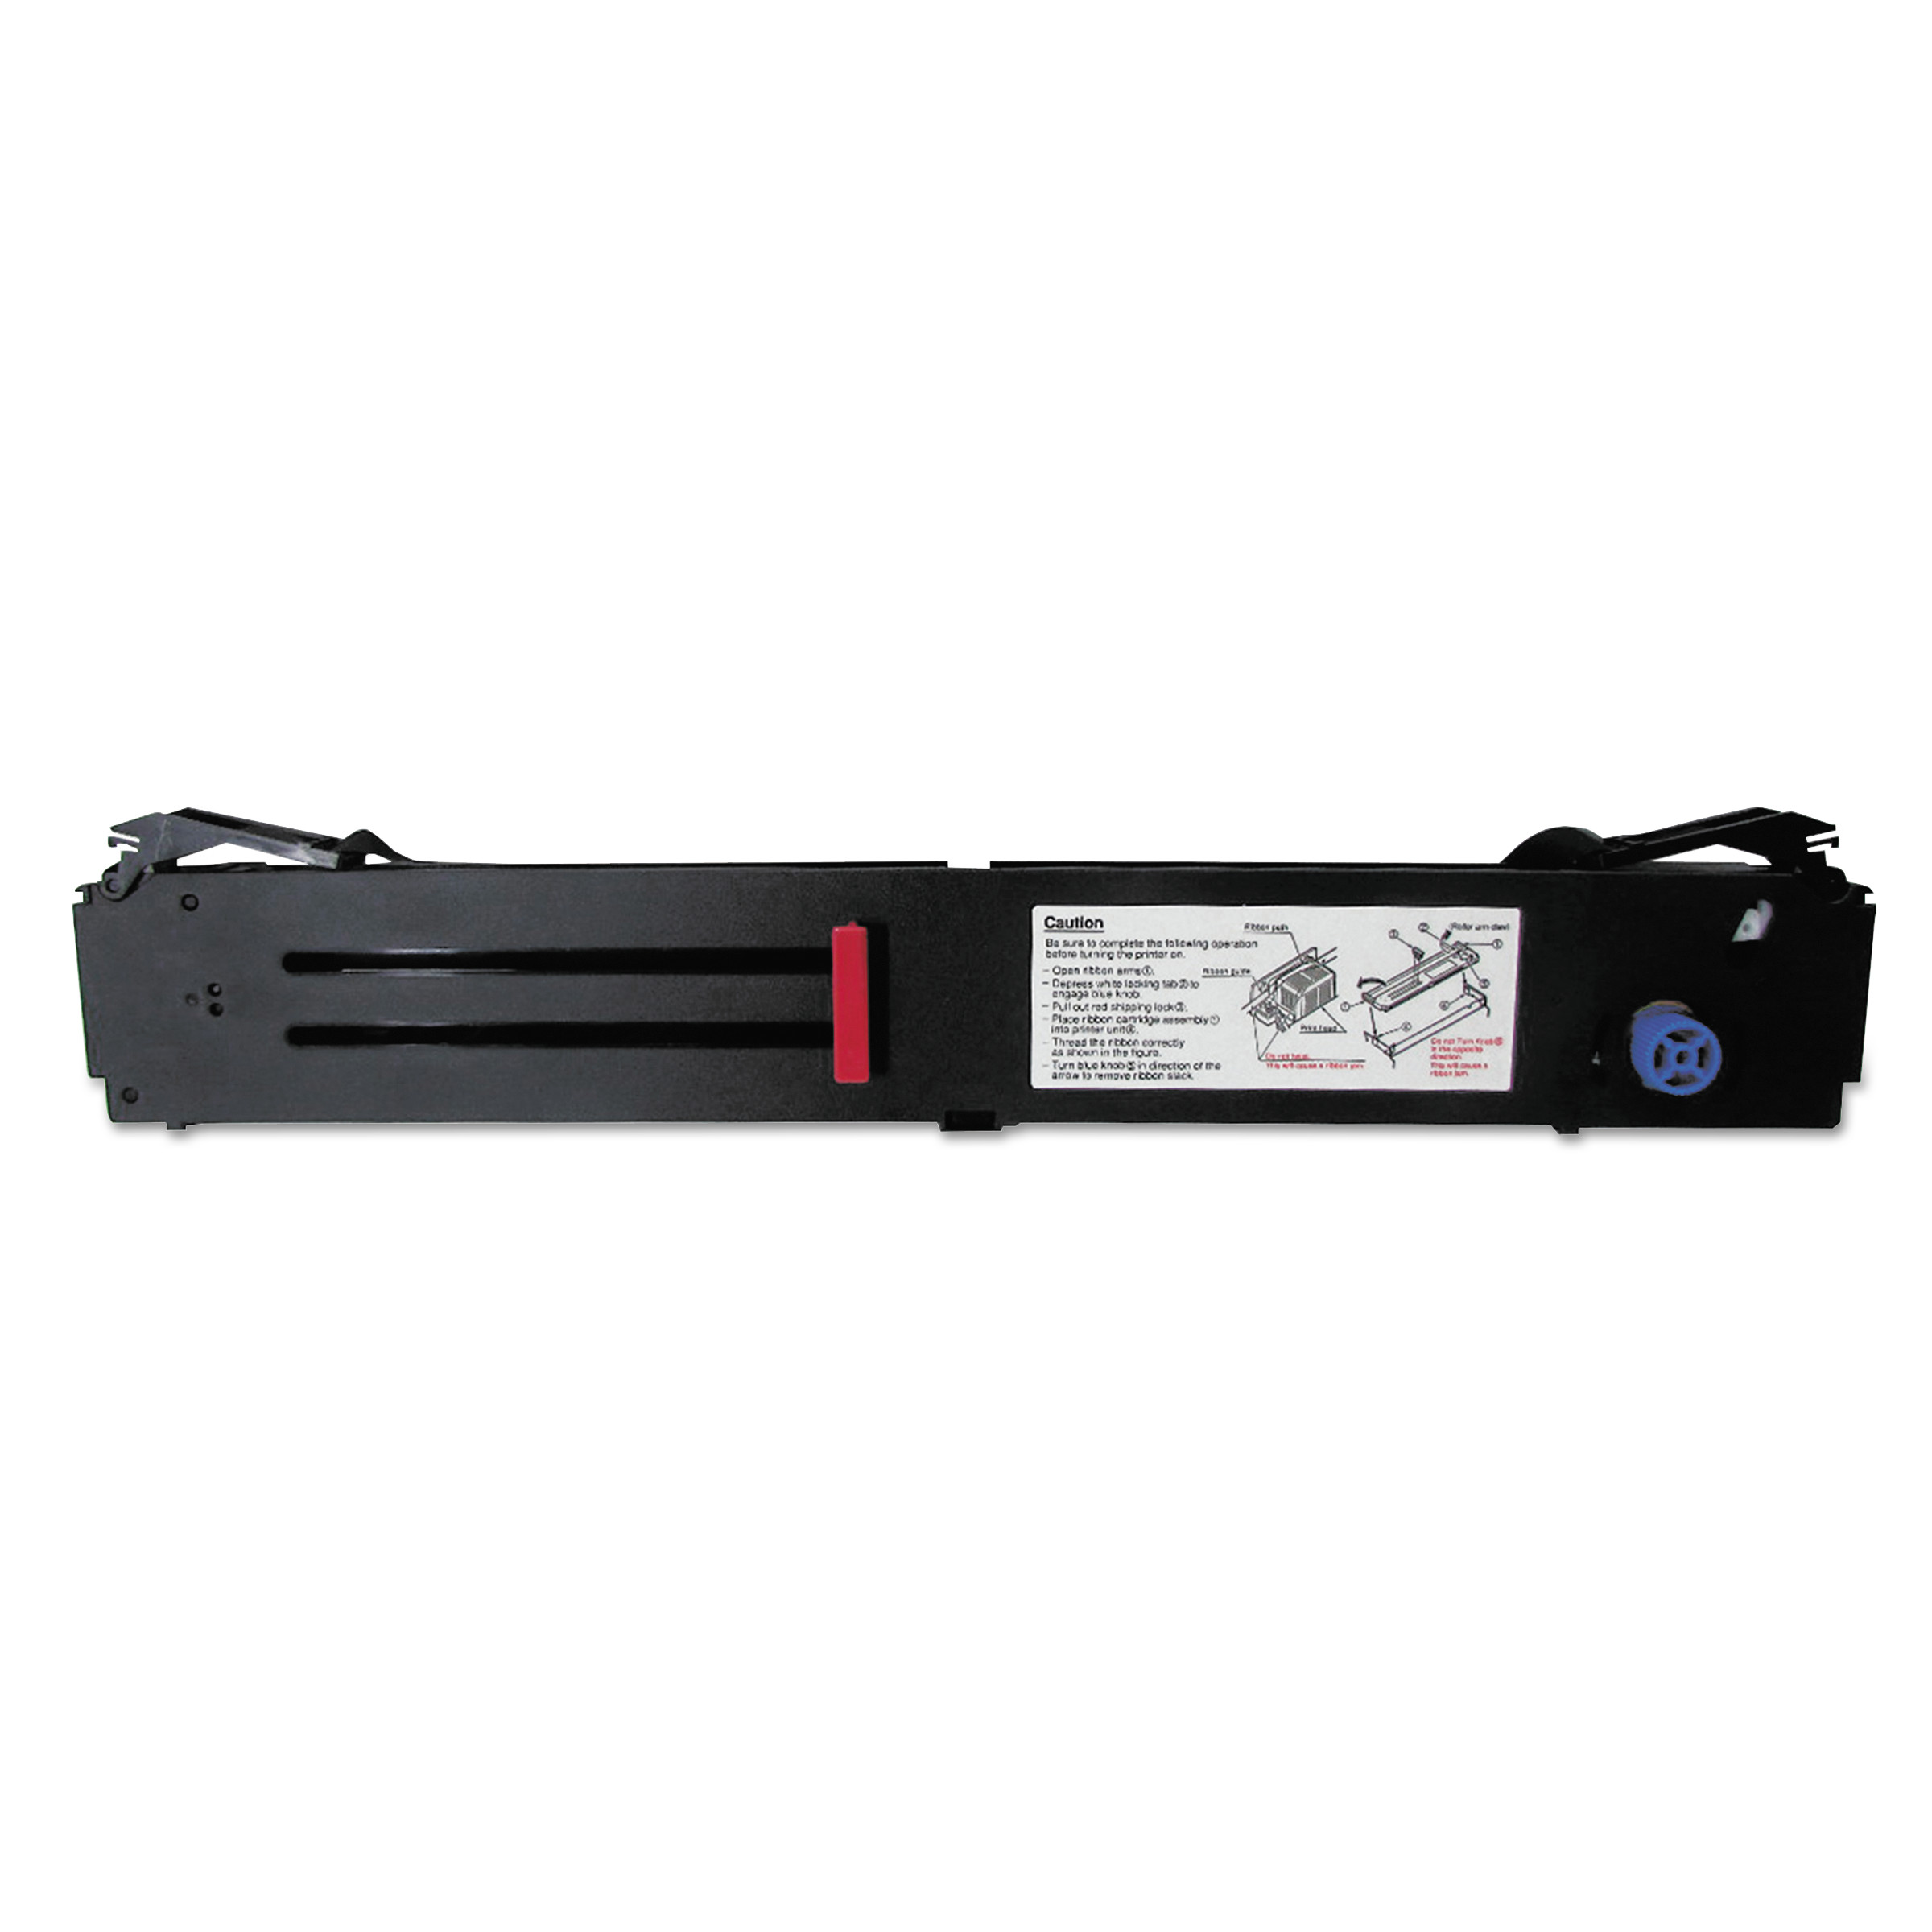  Innovera AC-O4410 40629302 Compatible OKI Printer Ribbon, Black (IVR40629302) 